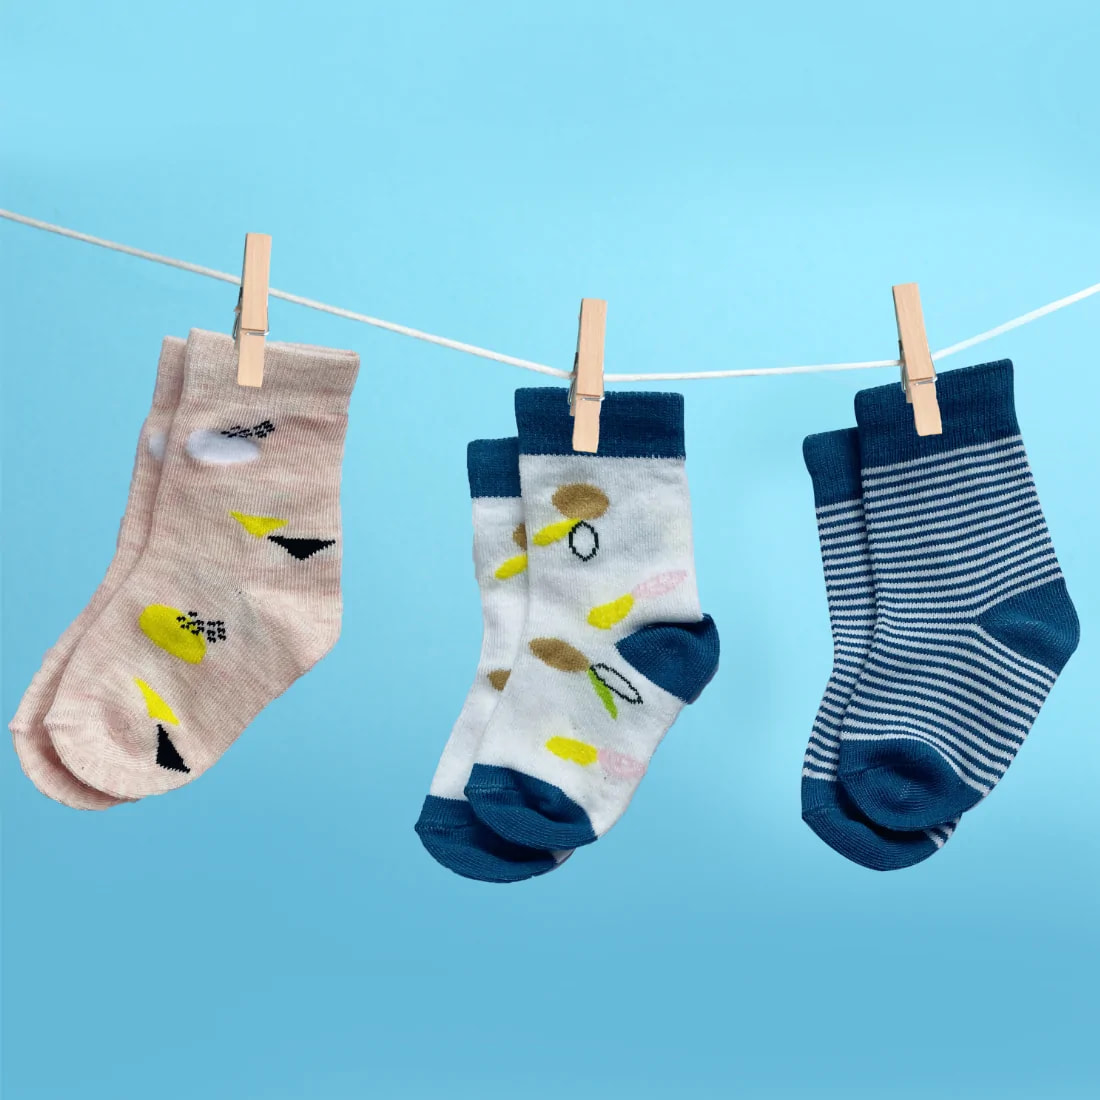 Baby Socks 12-24 Months | Elasticated & Antibacterial | Breathable, Shrinkable, Sweat & Wear Resistant | Unisex Blue Striped & Floral | Pack of 3